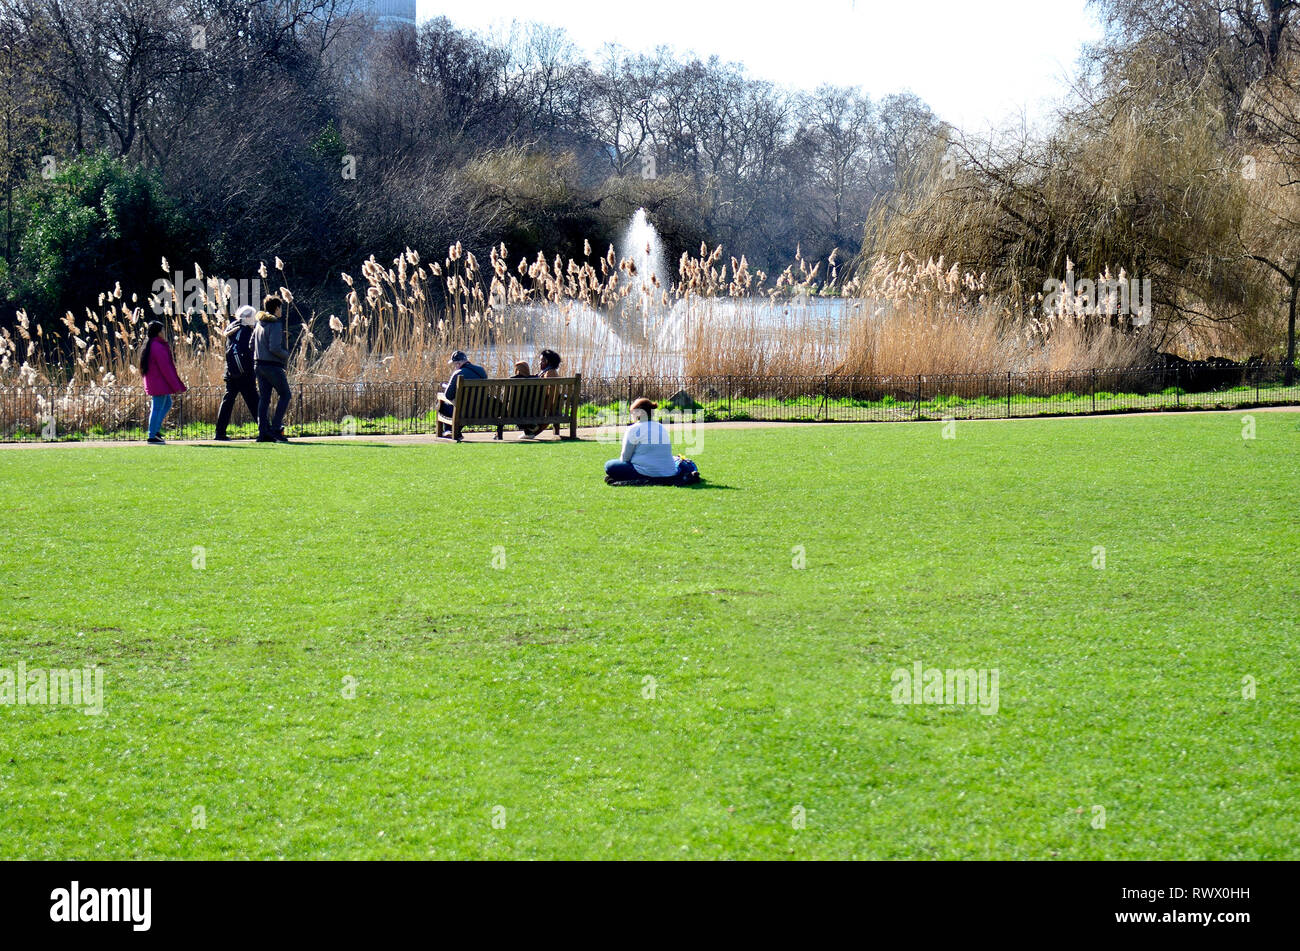 London, England, UK. St James's Park - einem warmen sonnigen Tag im Februar 2019 Stockfoto